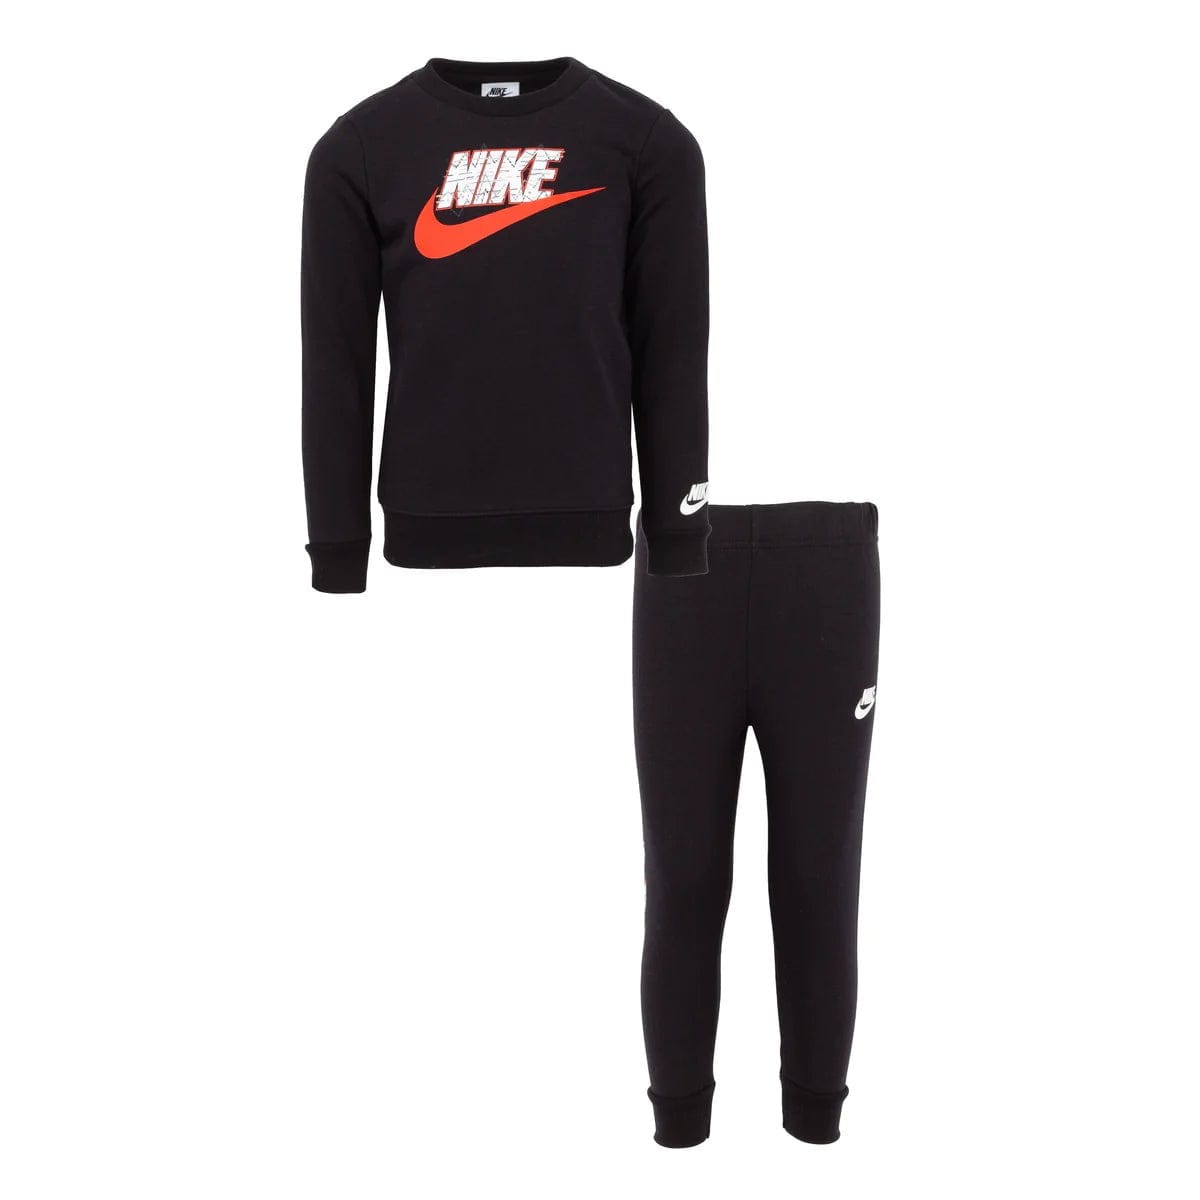 Nike Camo Tricot Set/ Track Suit 2PC Jacket/Pants Black/Gray Boys Size 5 |  eBay